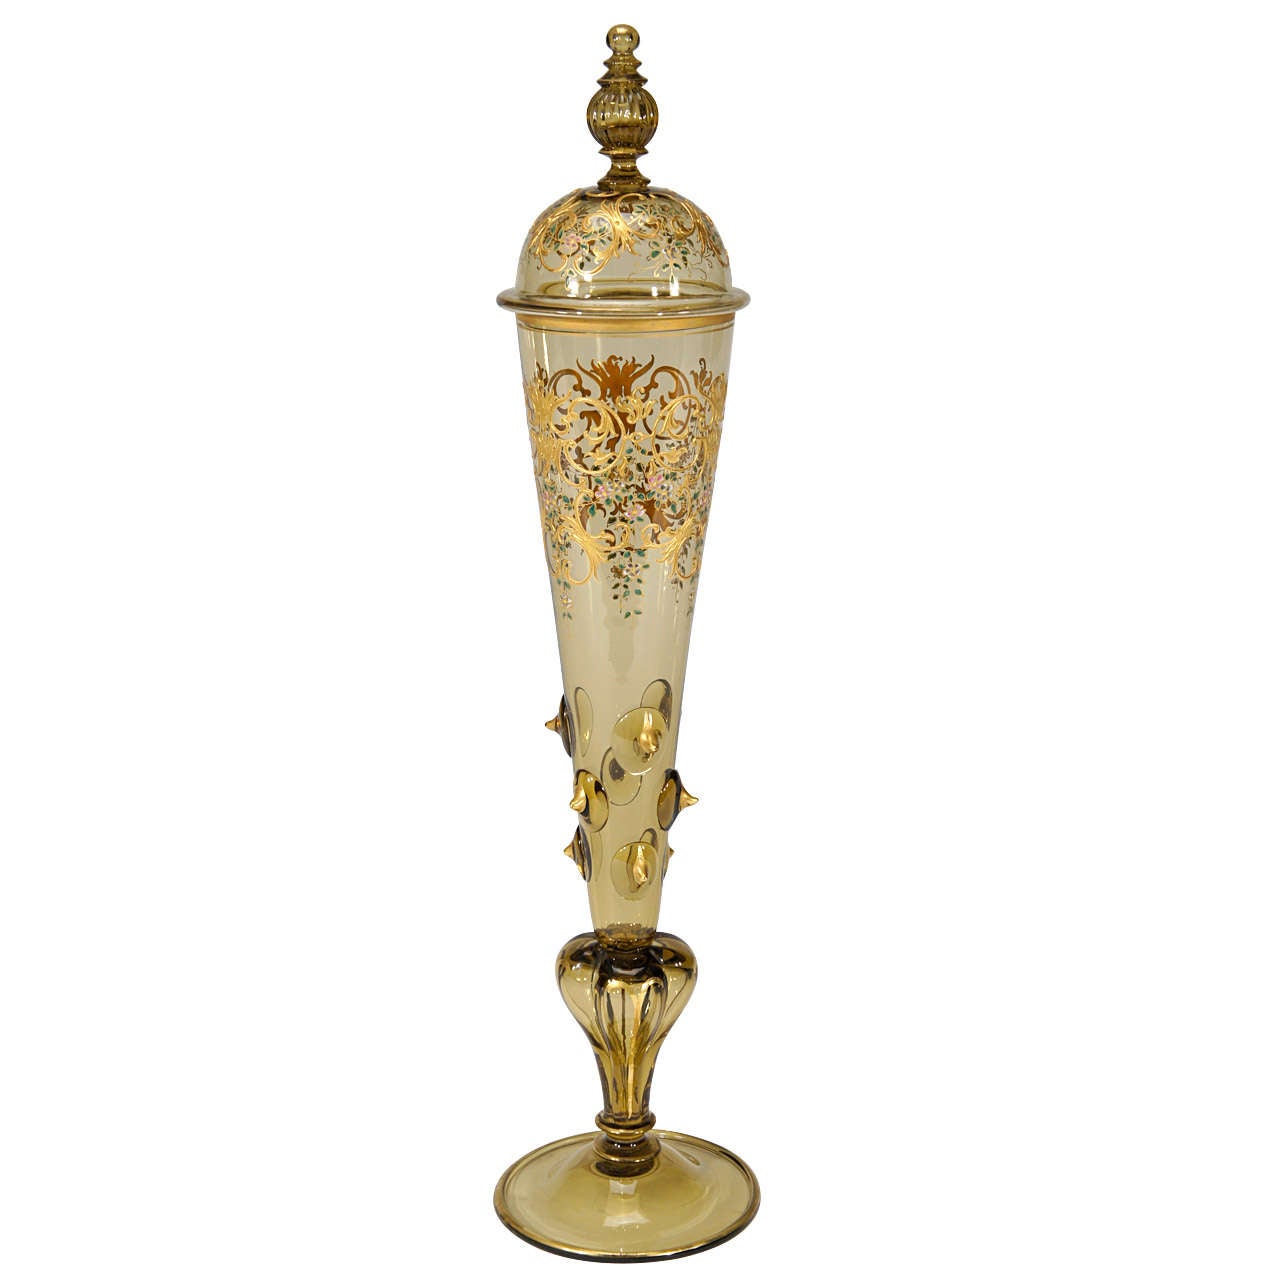 Moser 19" Hand Blown Topaz Covered Vase/Pokal w/ Prunts & Raised Gilt Decoration